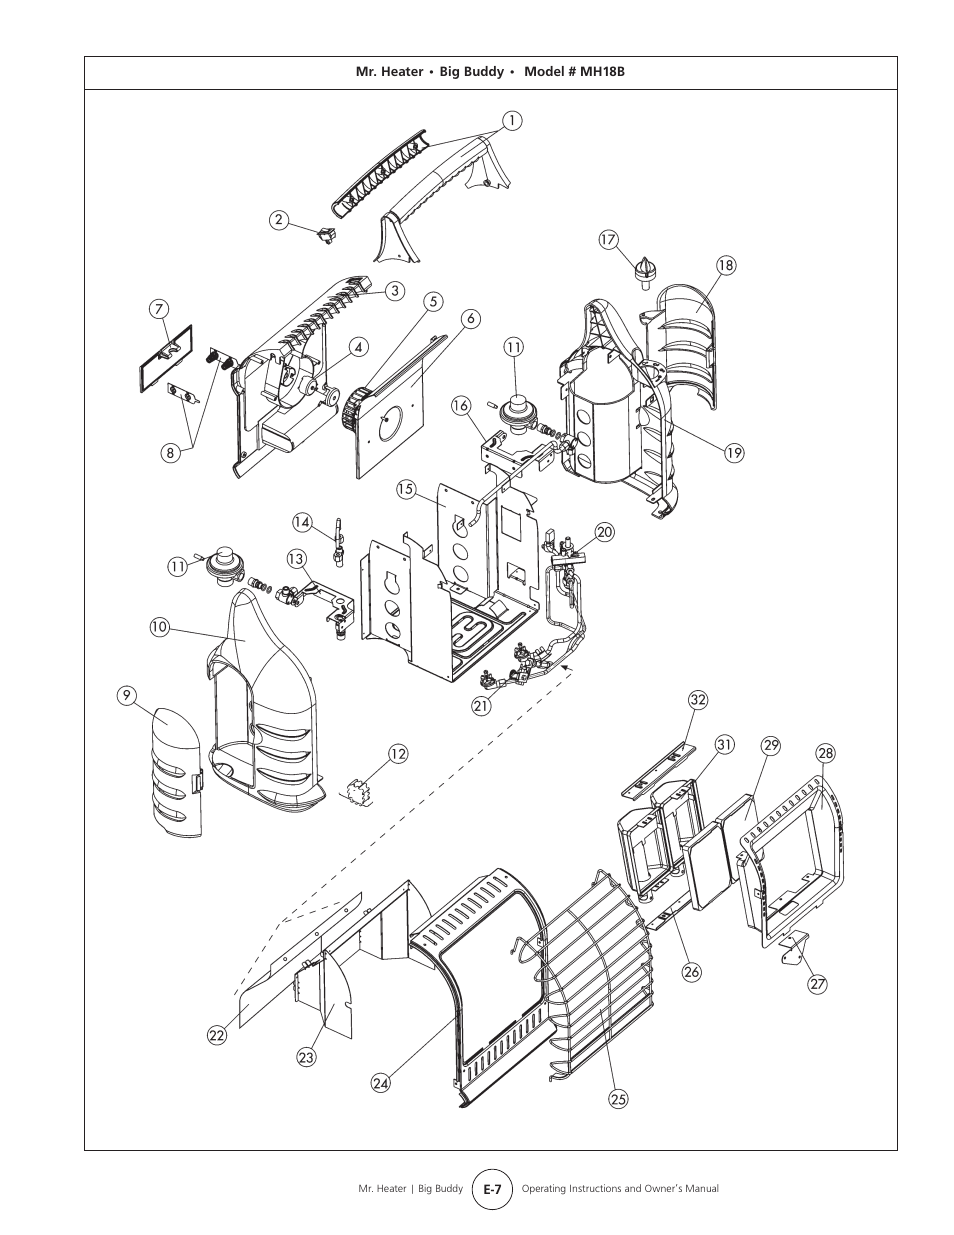 Mr. Heater BIG BUDDY MH188 User Manual | Page 7 / 16 | Original mode